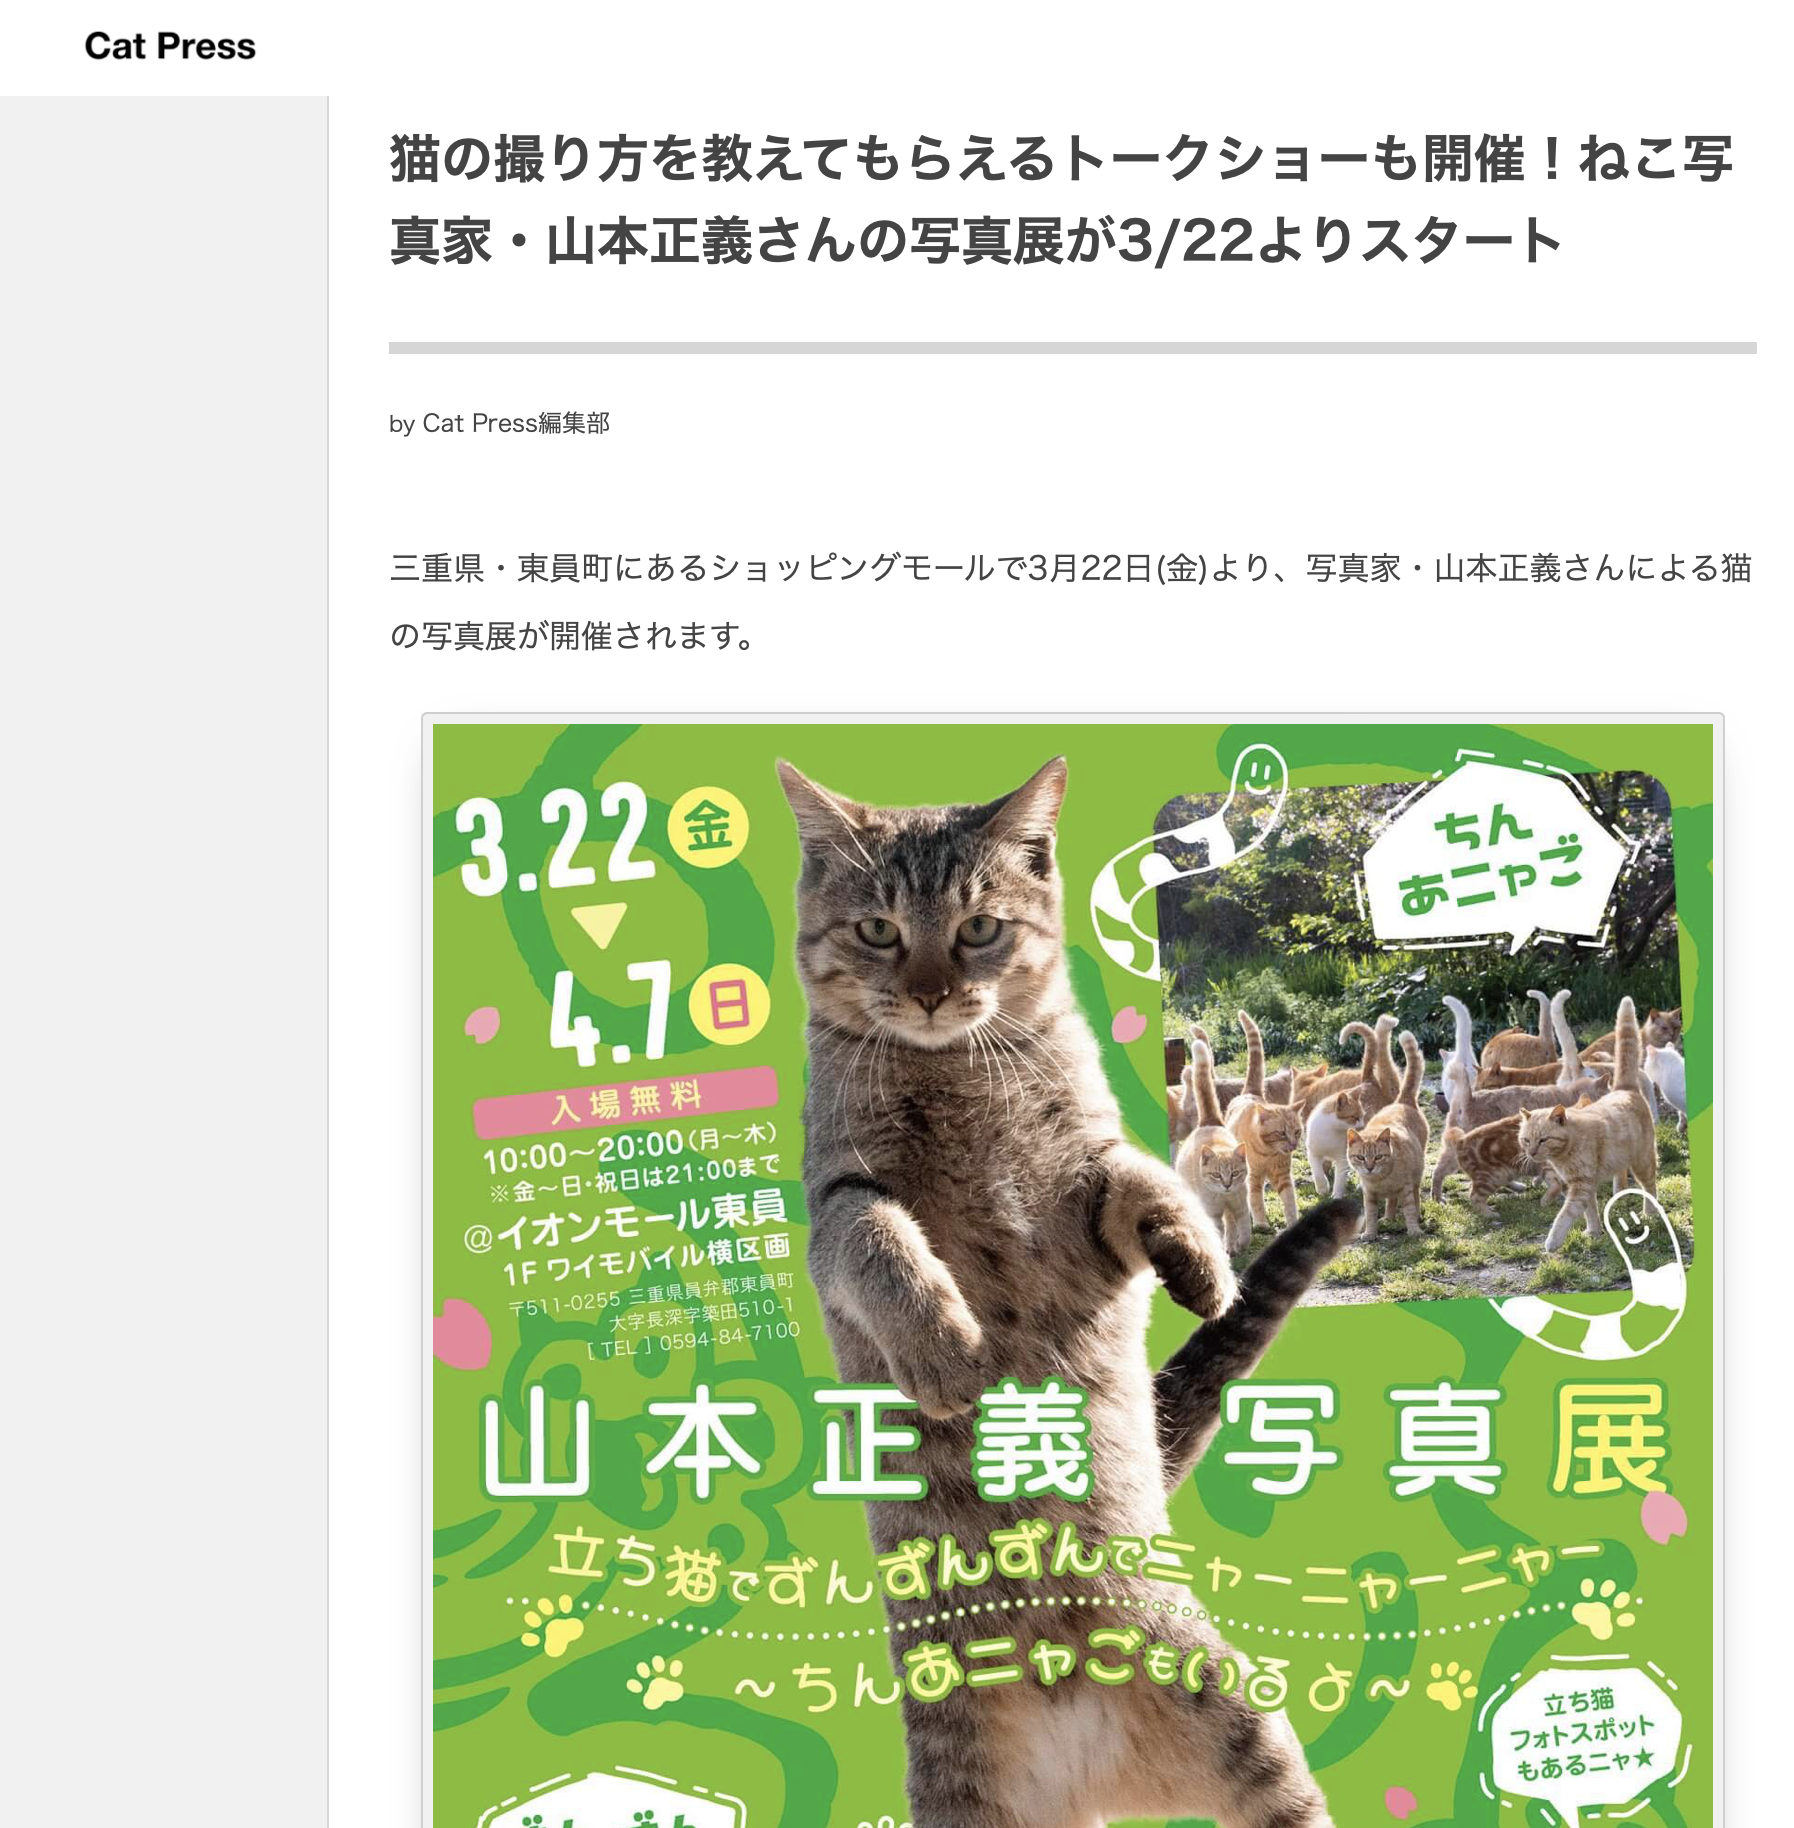 【CAT PRESS】猫の撮り方を教えてもらえるトークショーも開催！ねこ写真家・山本正義さんの写真展が3/22よりスタート【CAT PRESS】